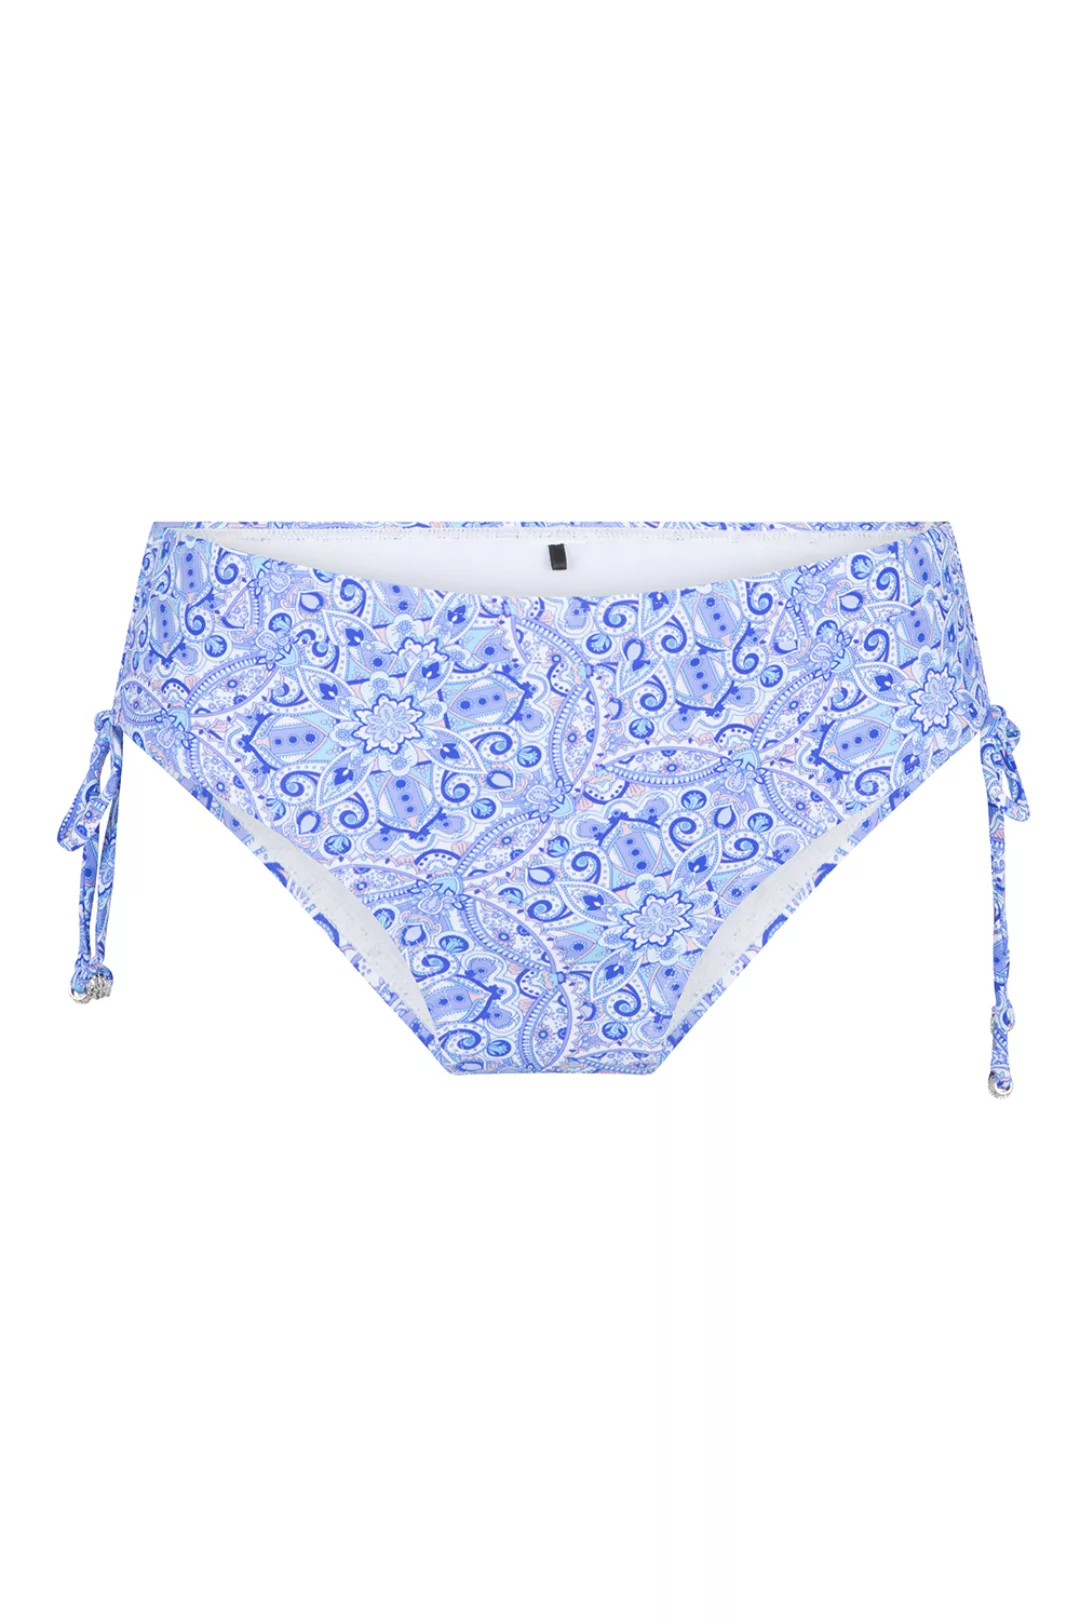 LingaDore Bikini Shorty Blue Paisley 36 blau günstig online kaufen